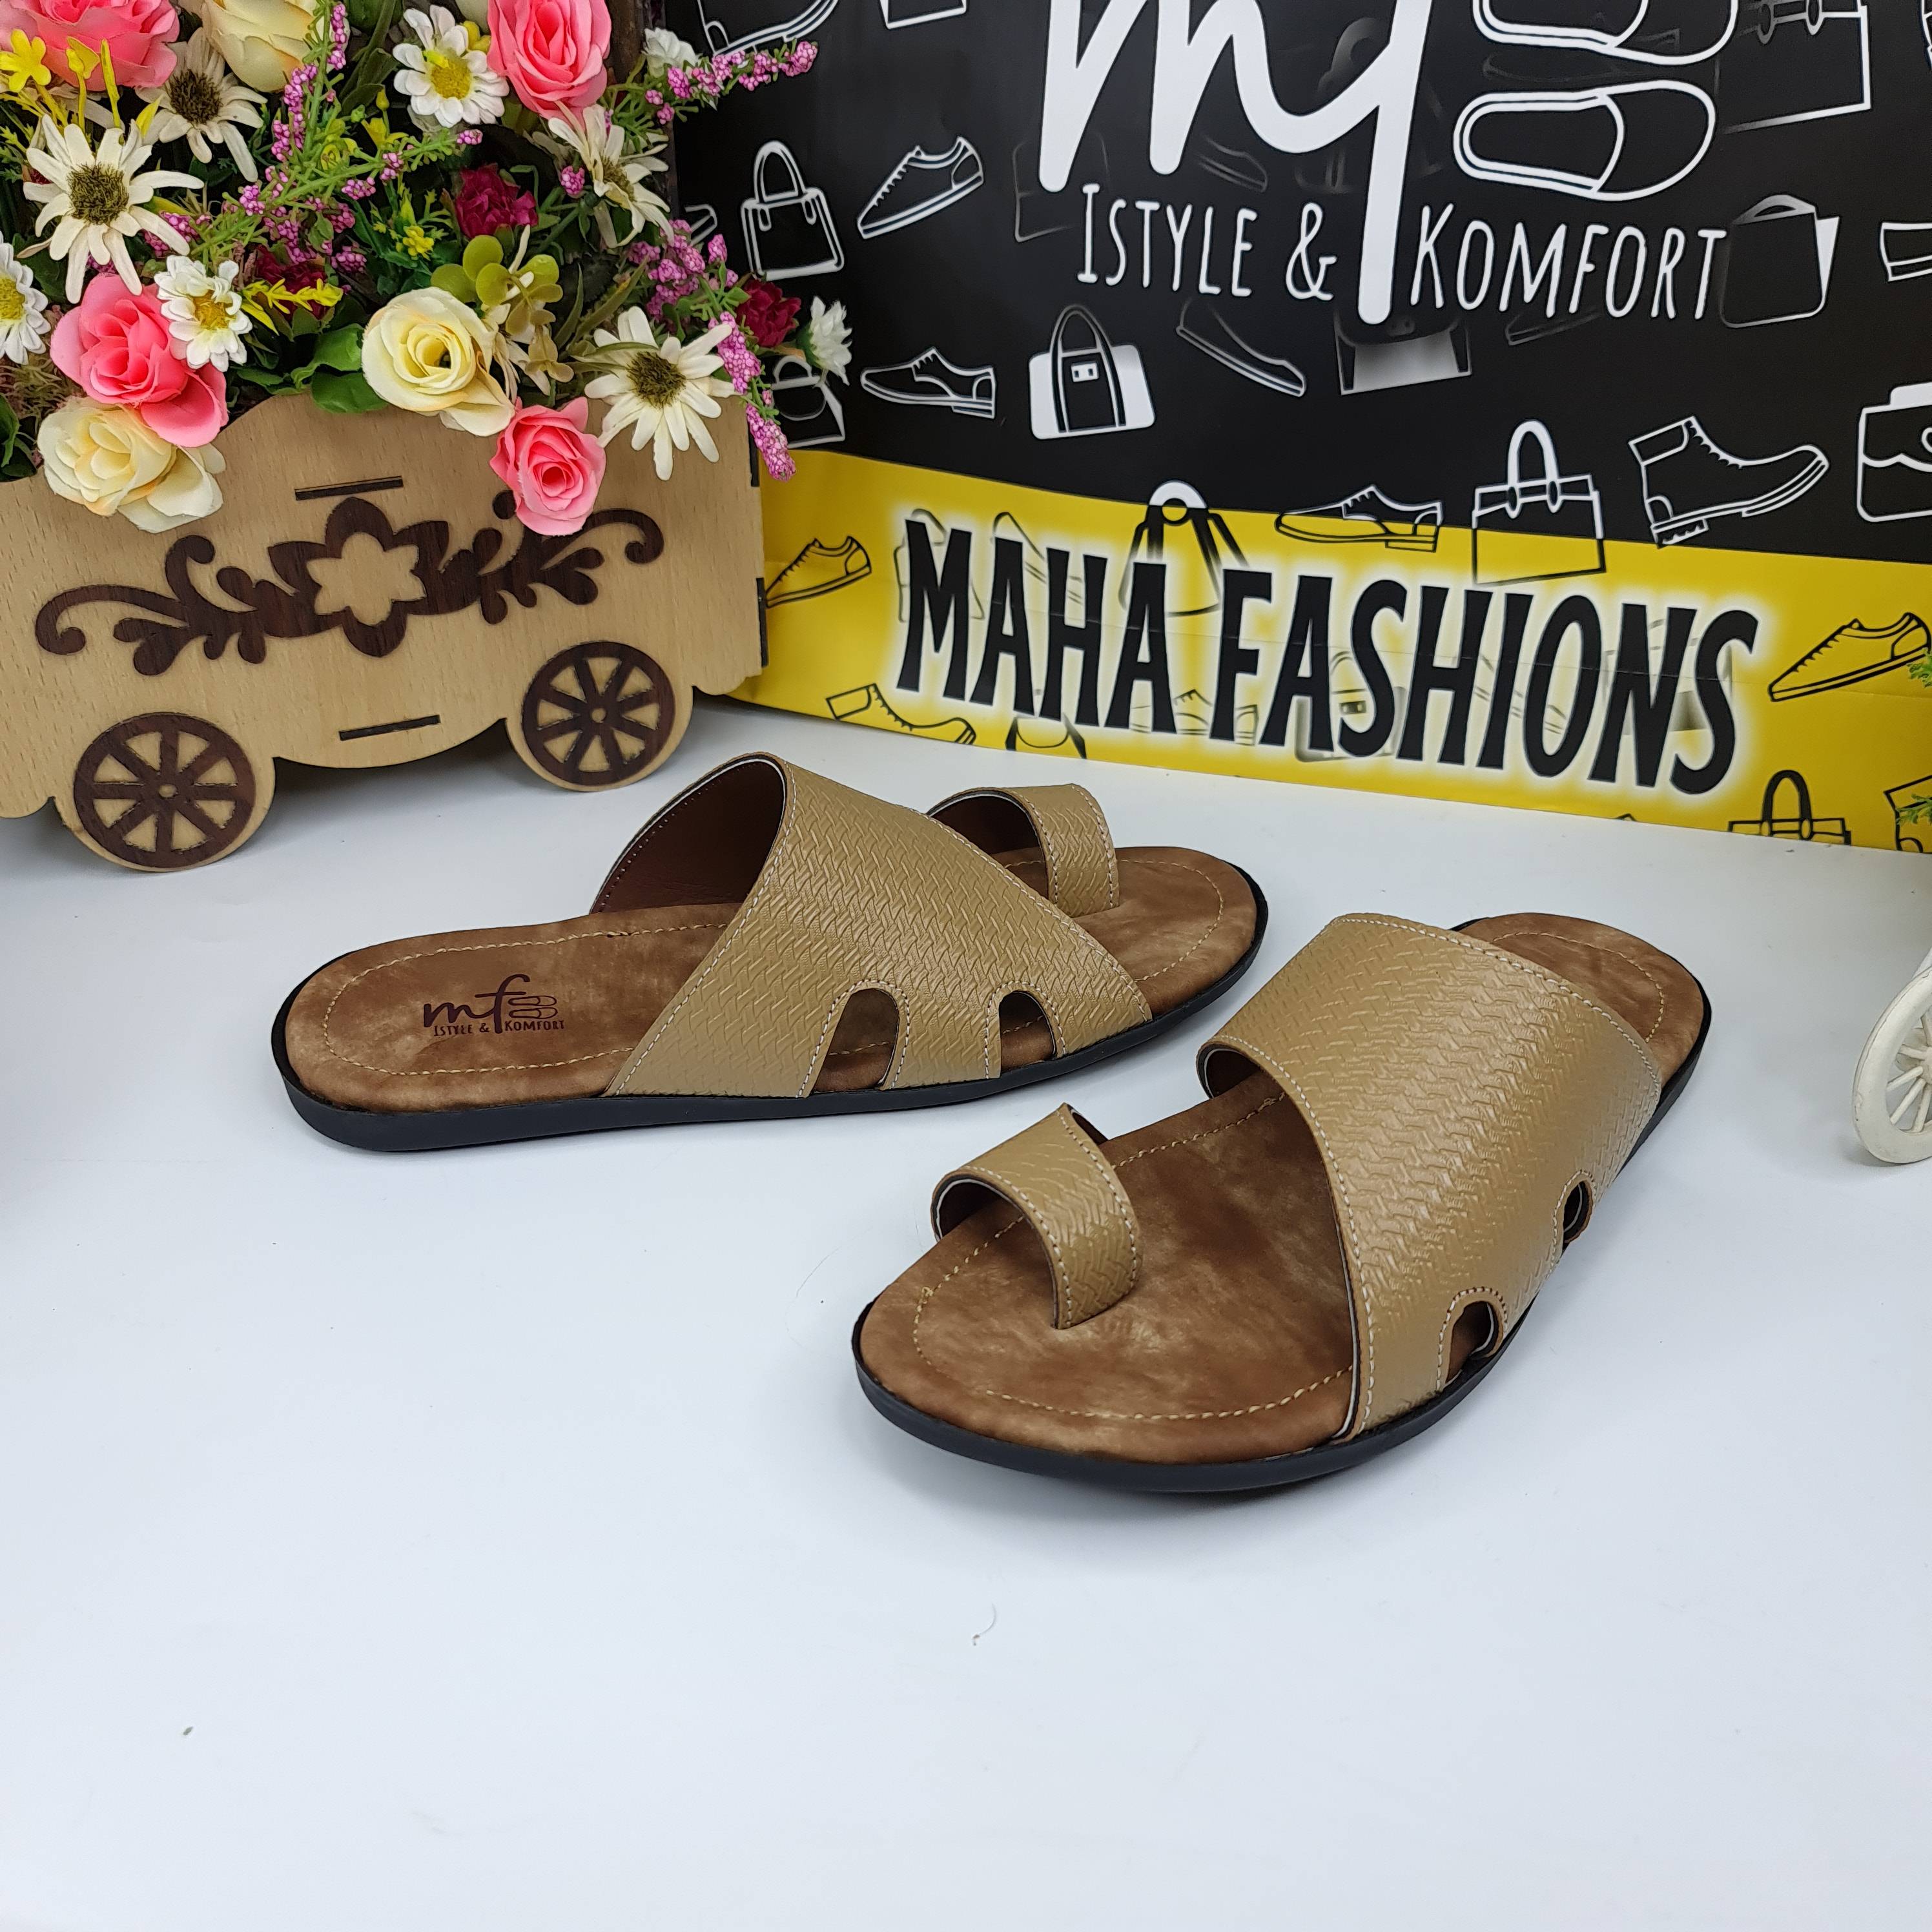 RM-091 Fown - Maha fashions -  